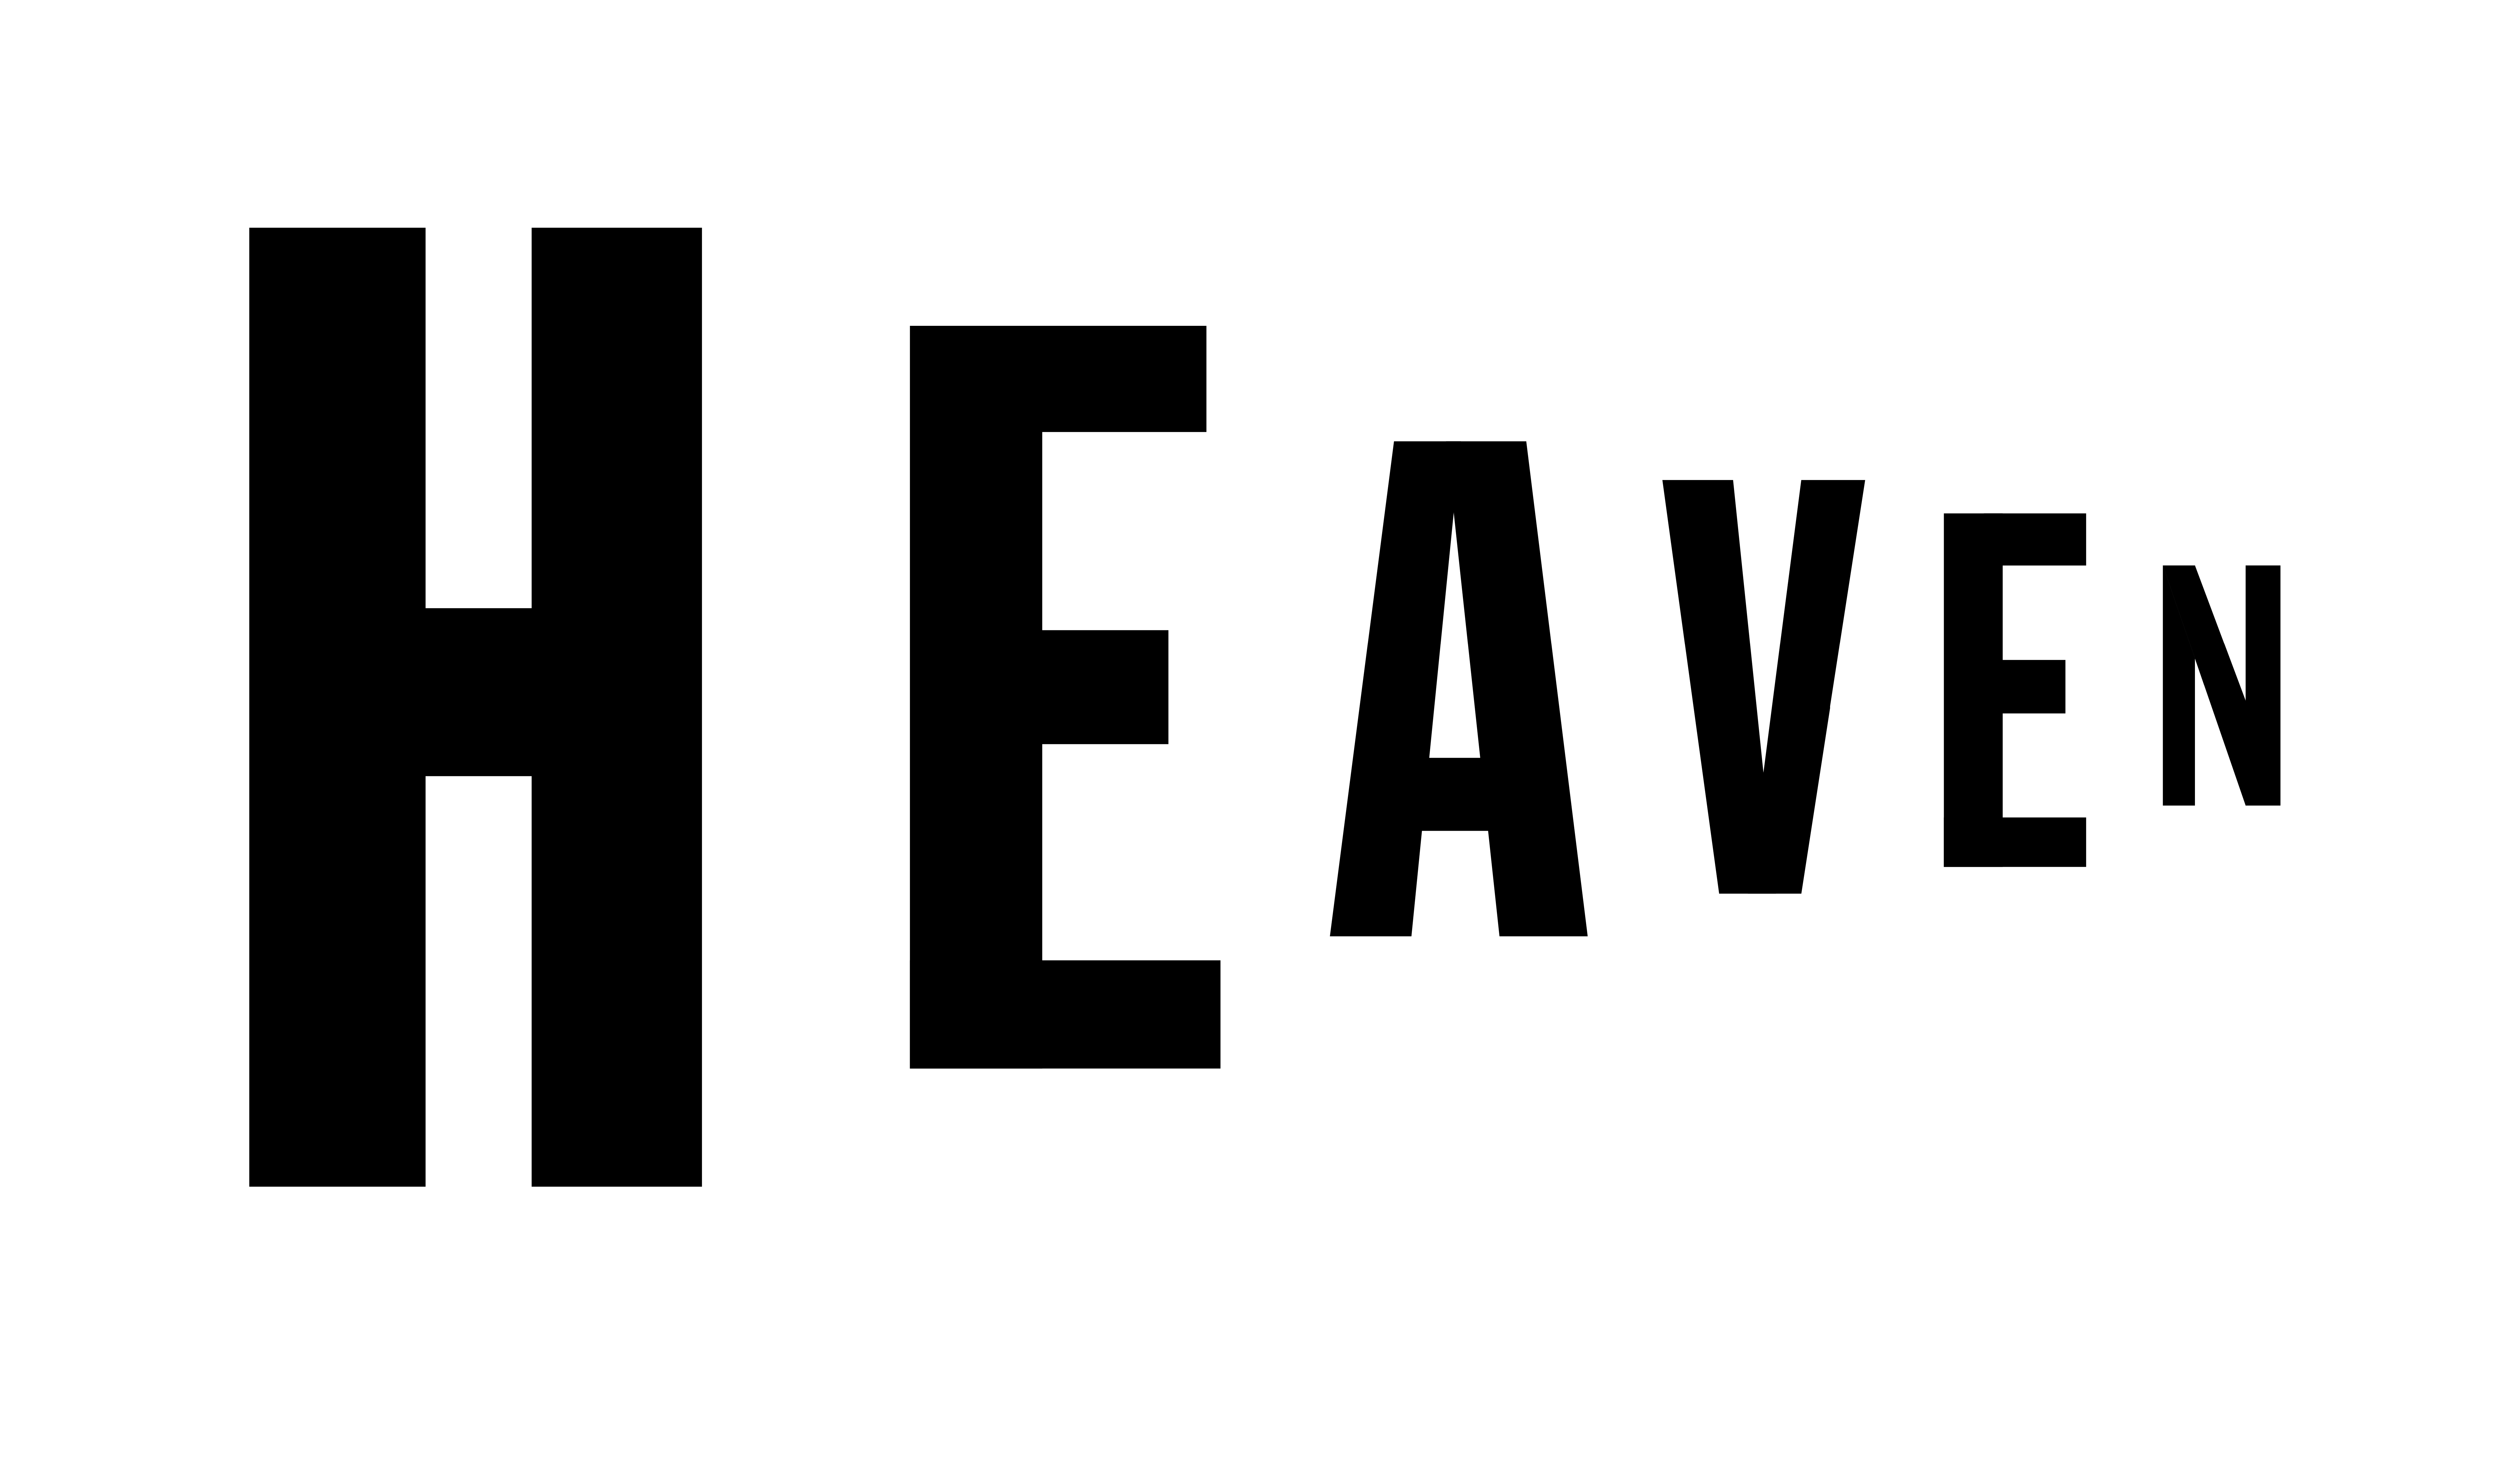 Heaven Logo - File:HEAVEN logo.png - Wikimedia Commons